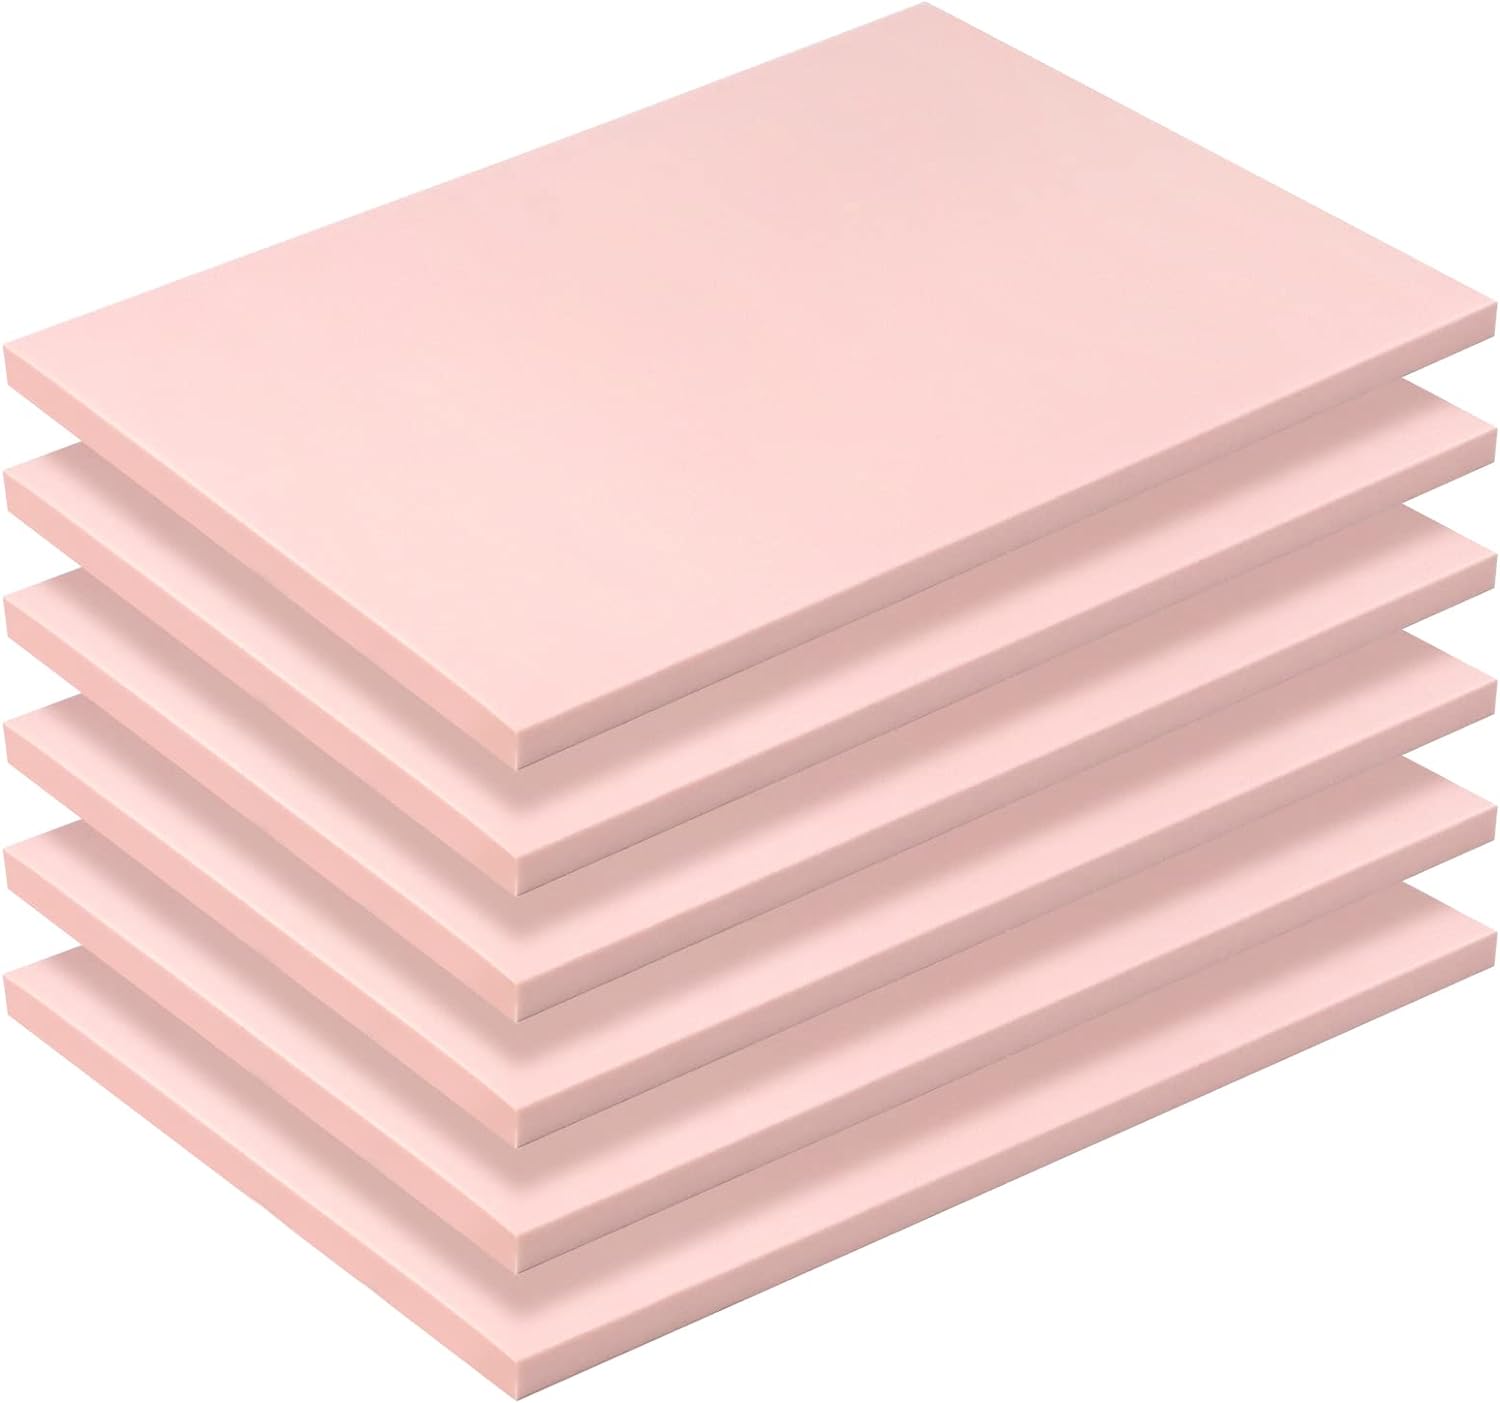 6 Pack Pale Pink Rubber Stamp Carving Blocks Brick 8"x6"